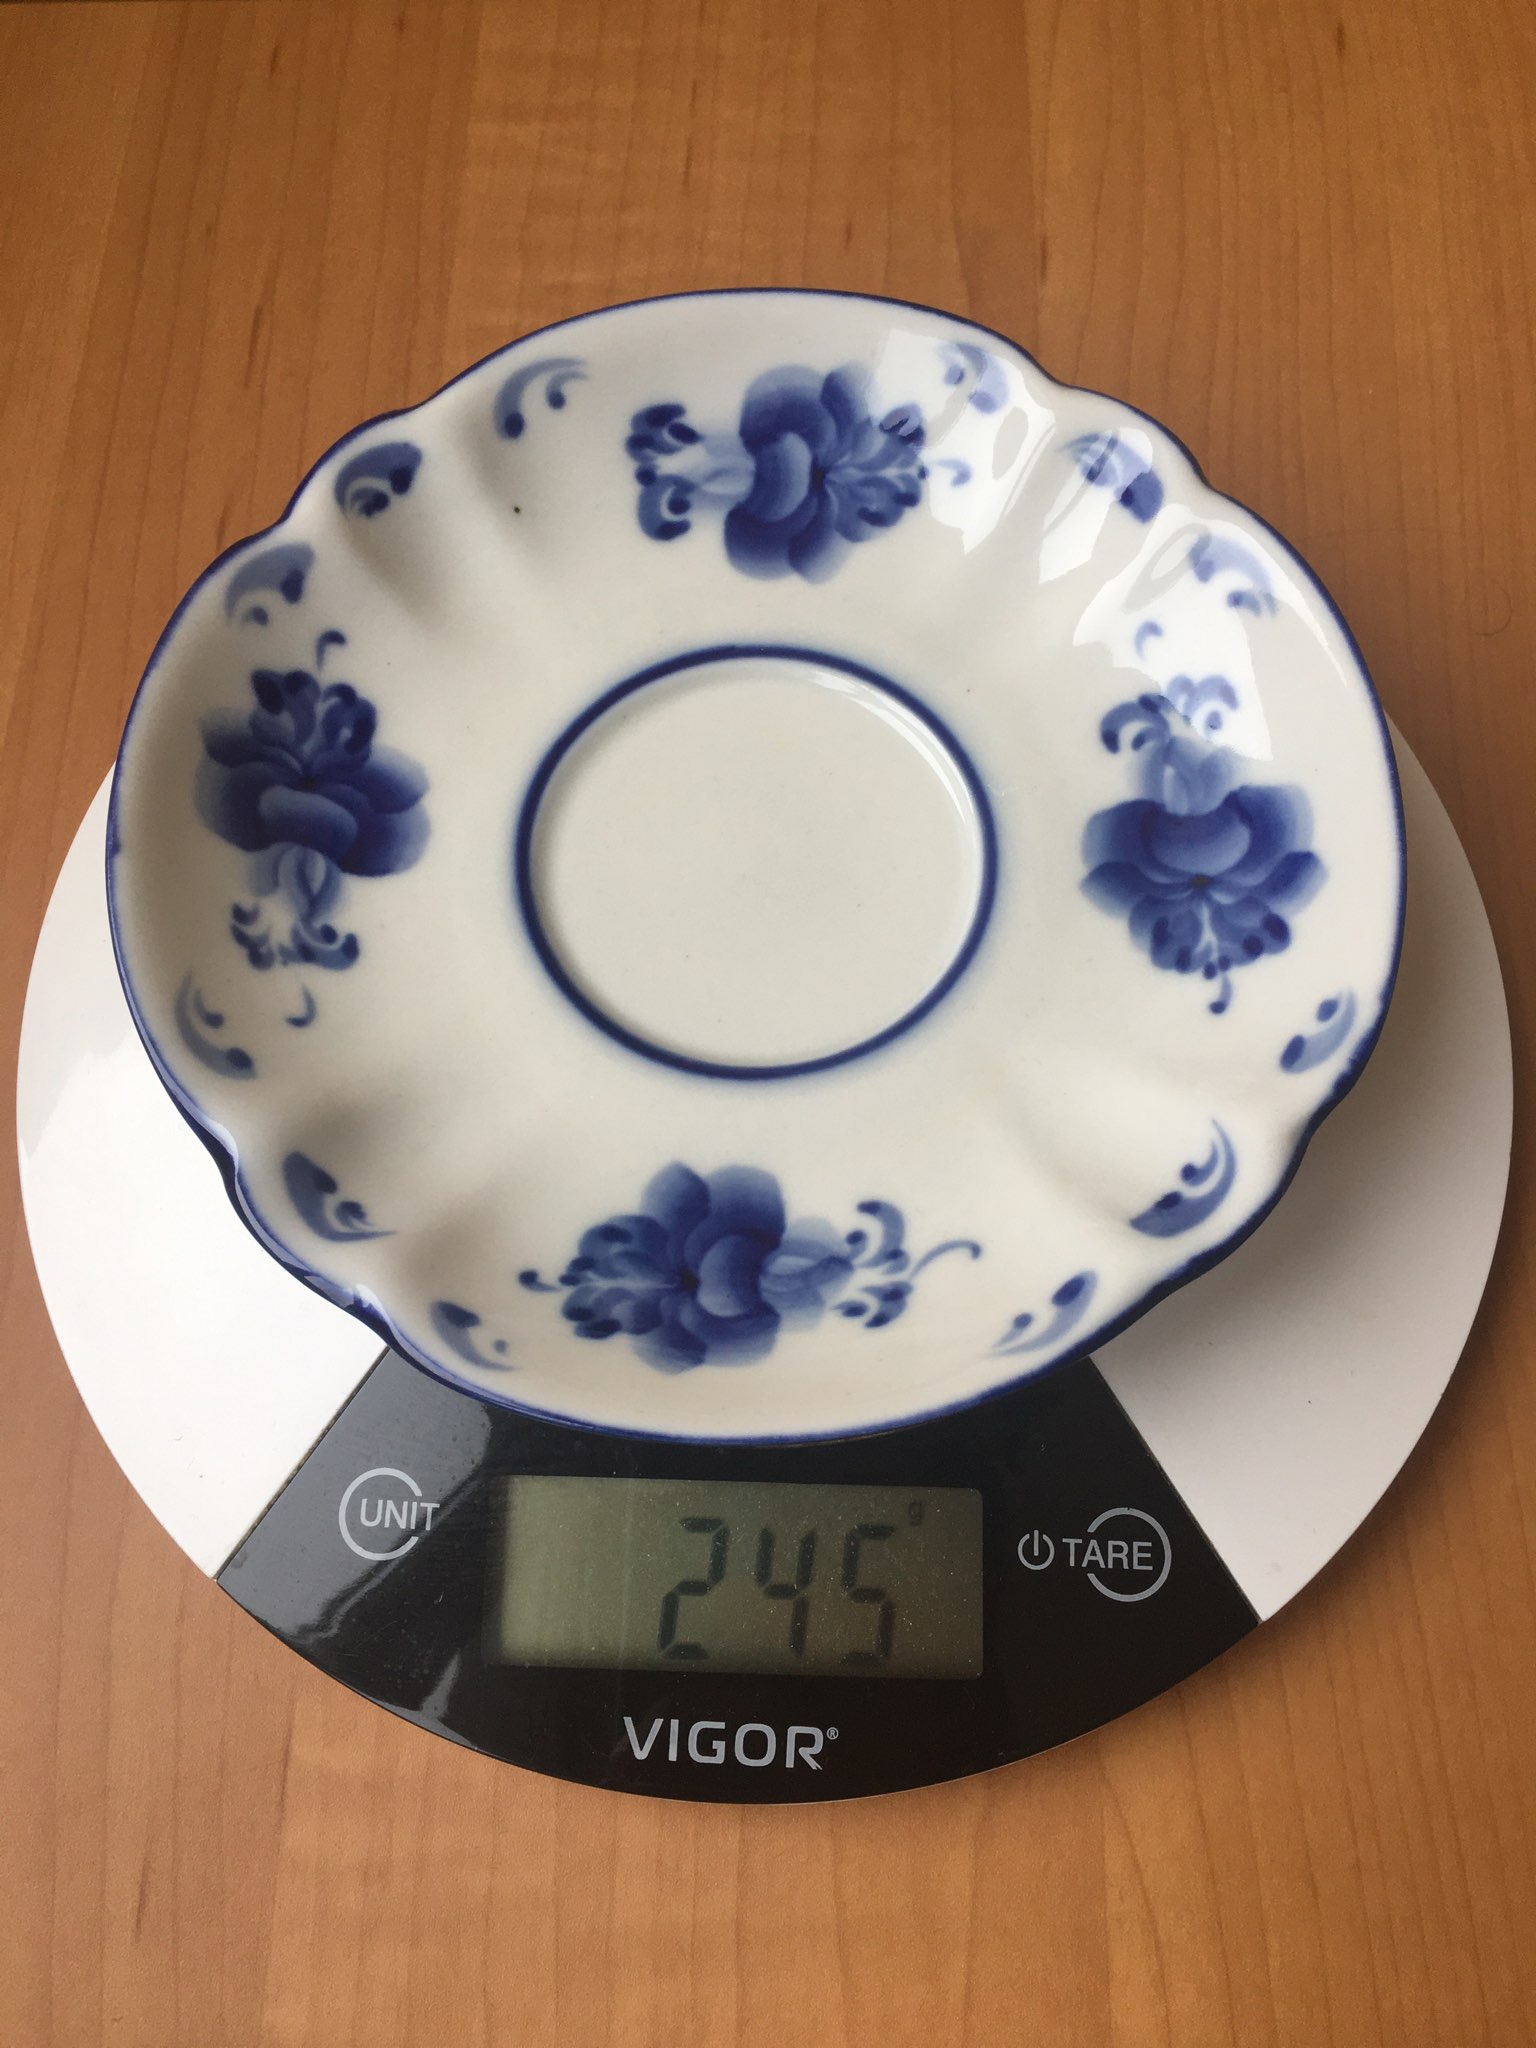 weight of dessert plate - gzhel